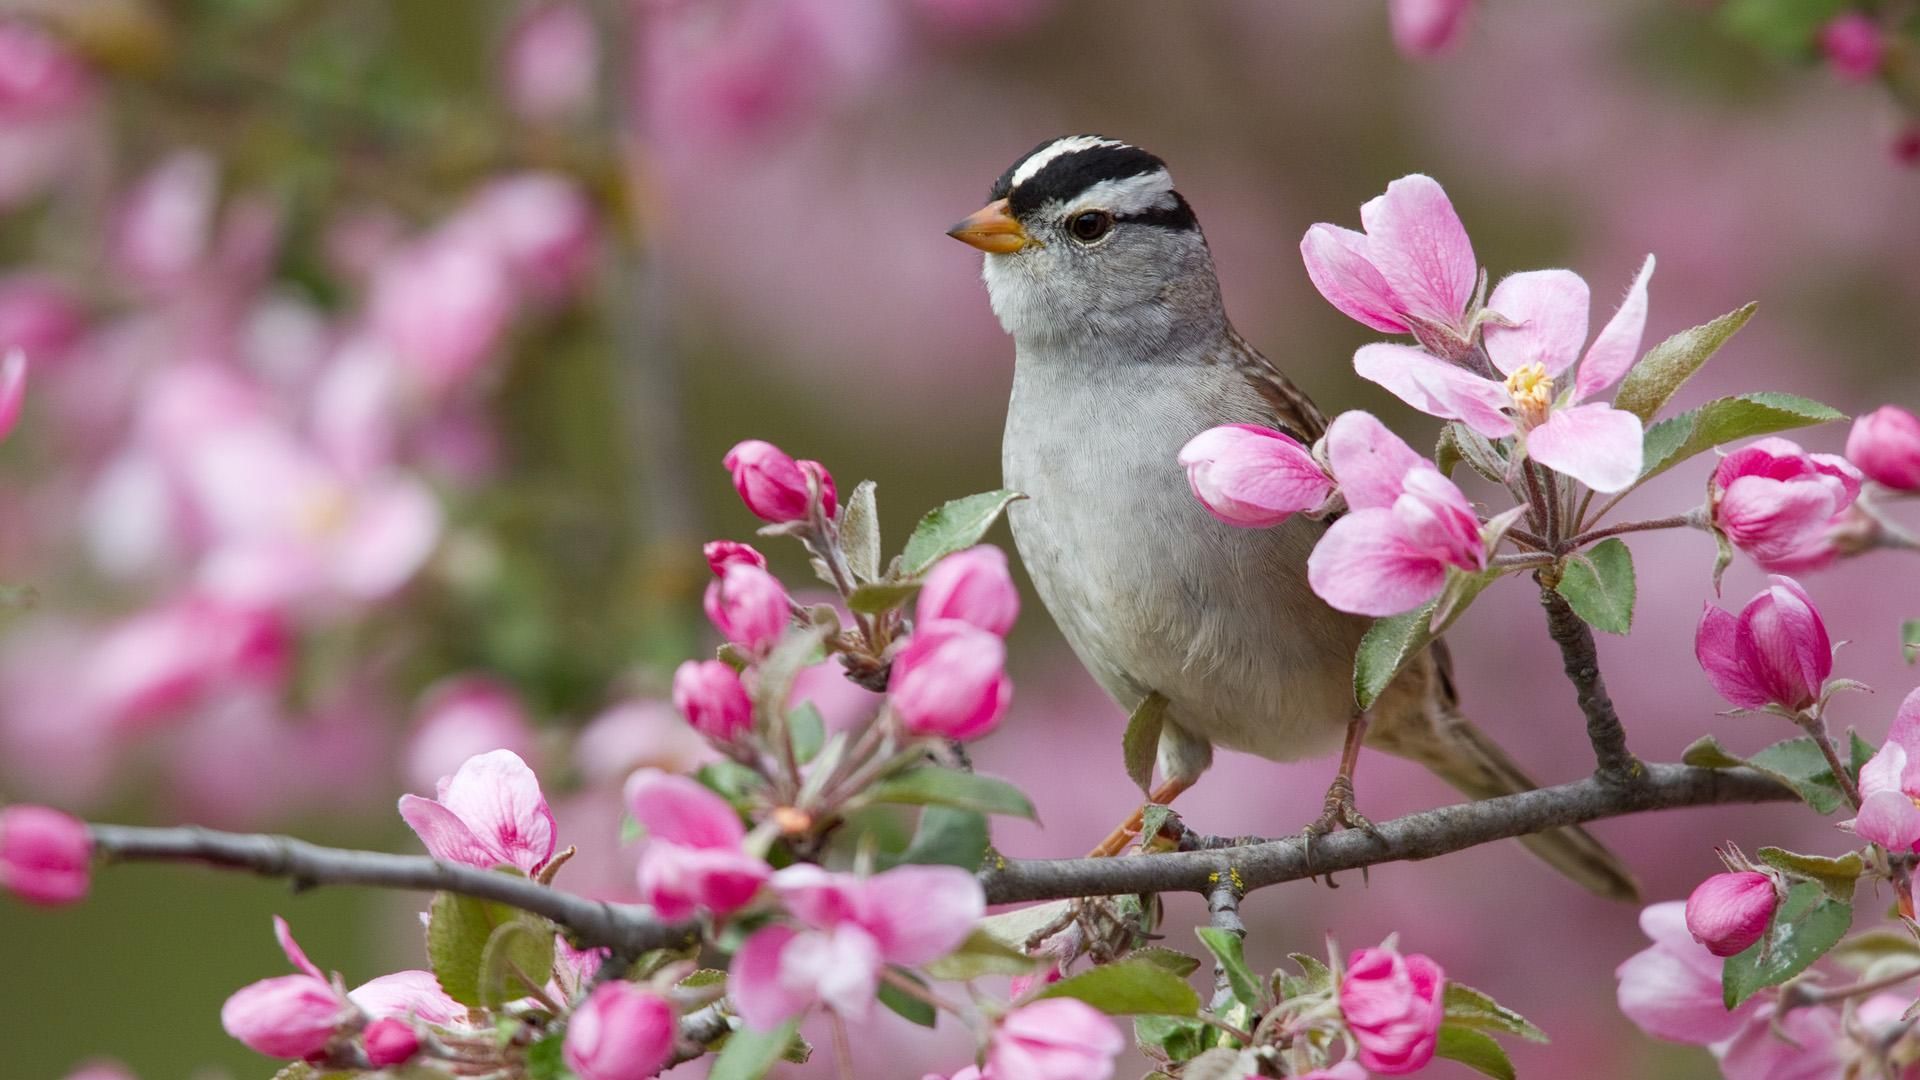 Hd Wallpaper Bird of Spring Wallpaper HD. Fondos de pantalla de primavera, Pájaros hermosos, Pajaros